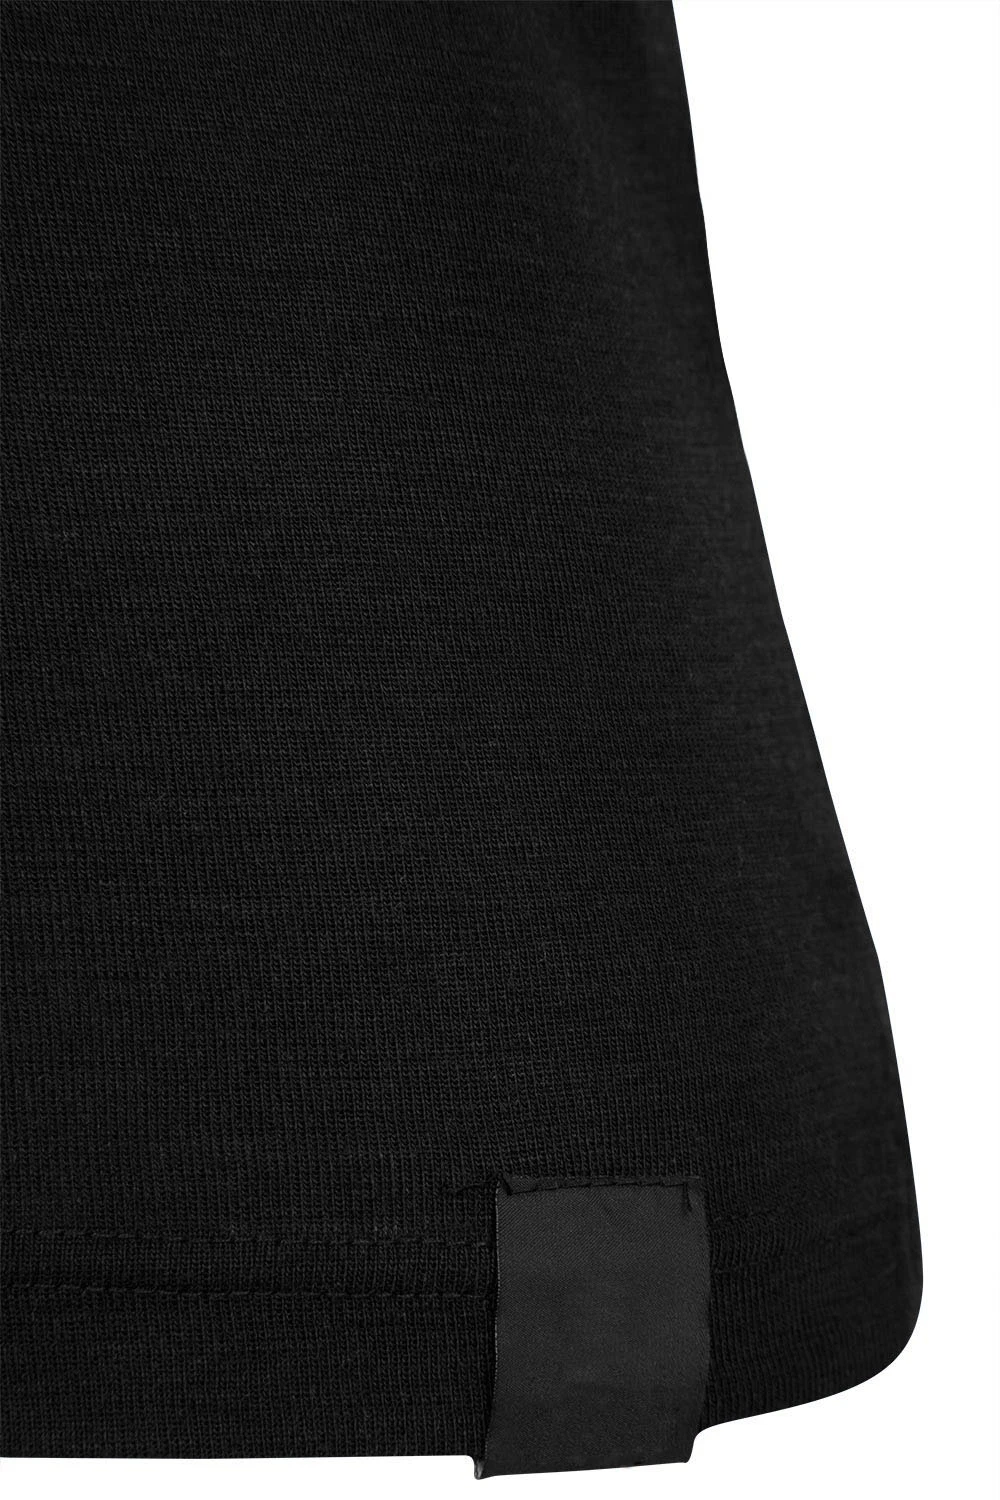 Wholesale/Supplier Mens Winter Warmest Merino Wool Base Layers Best Long Sleeved Round Neck Thermals Tops Underwear